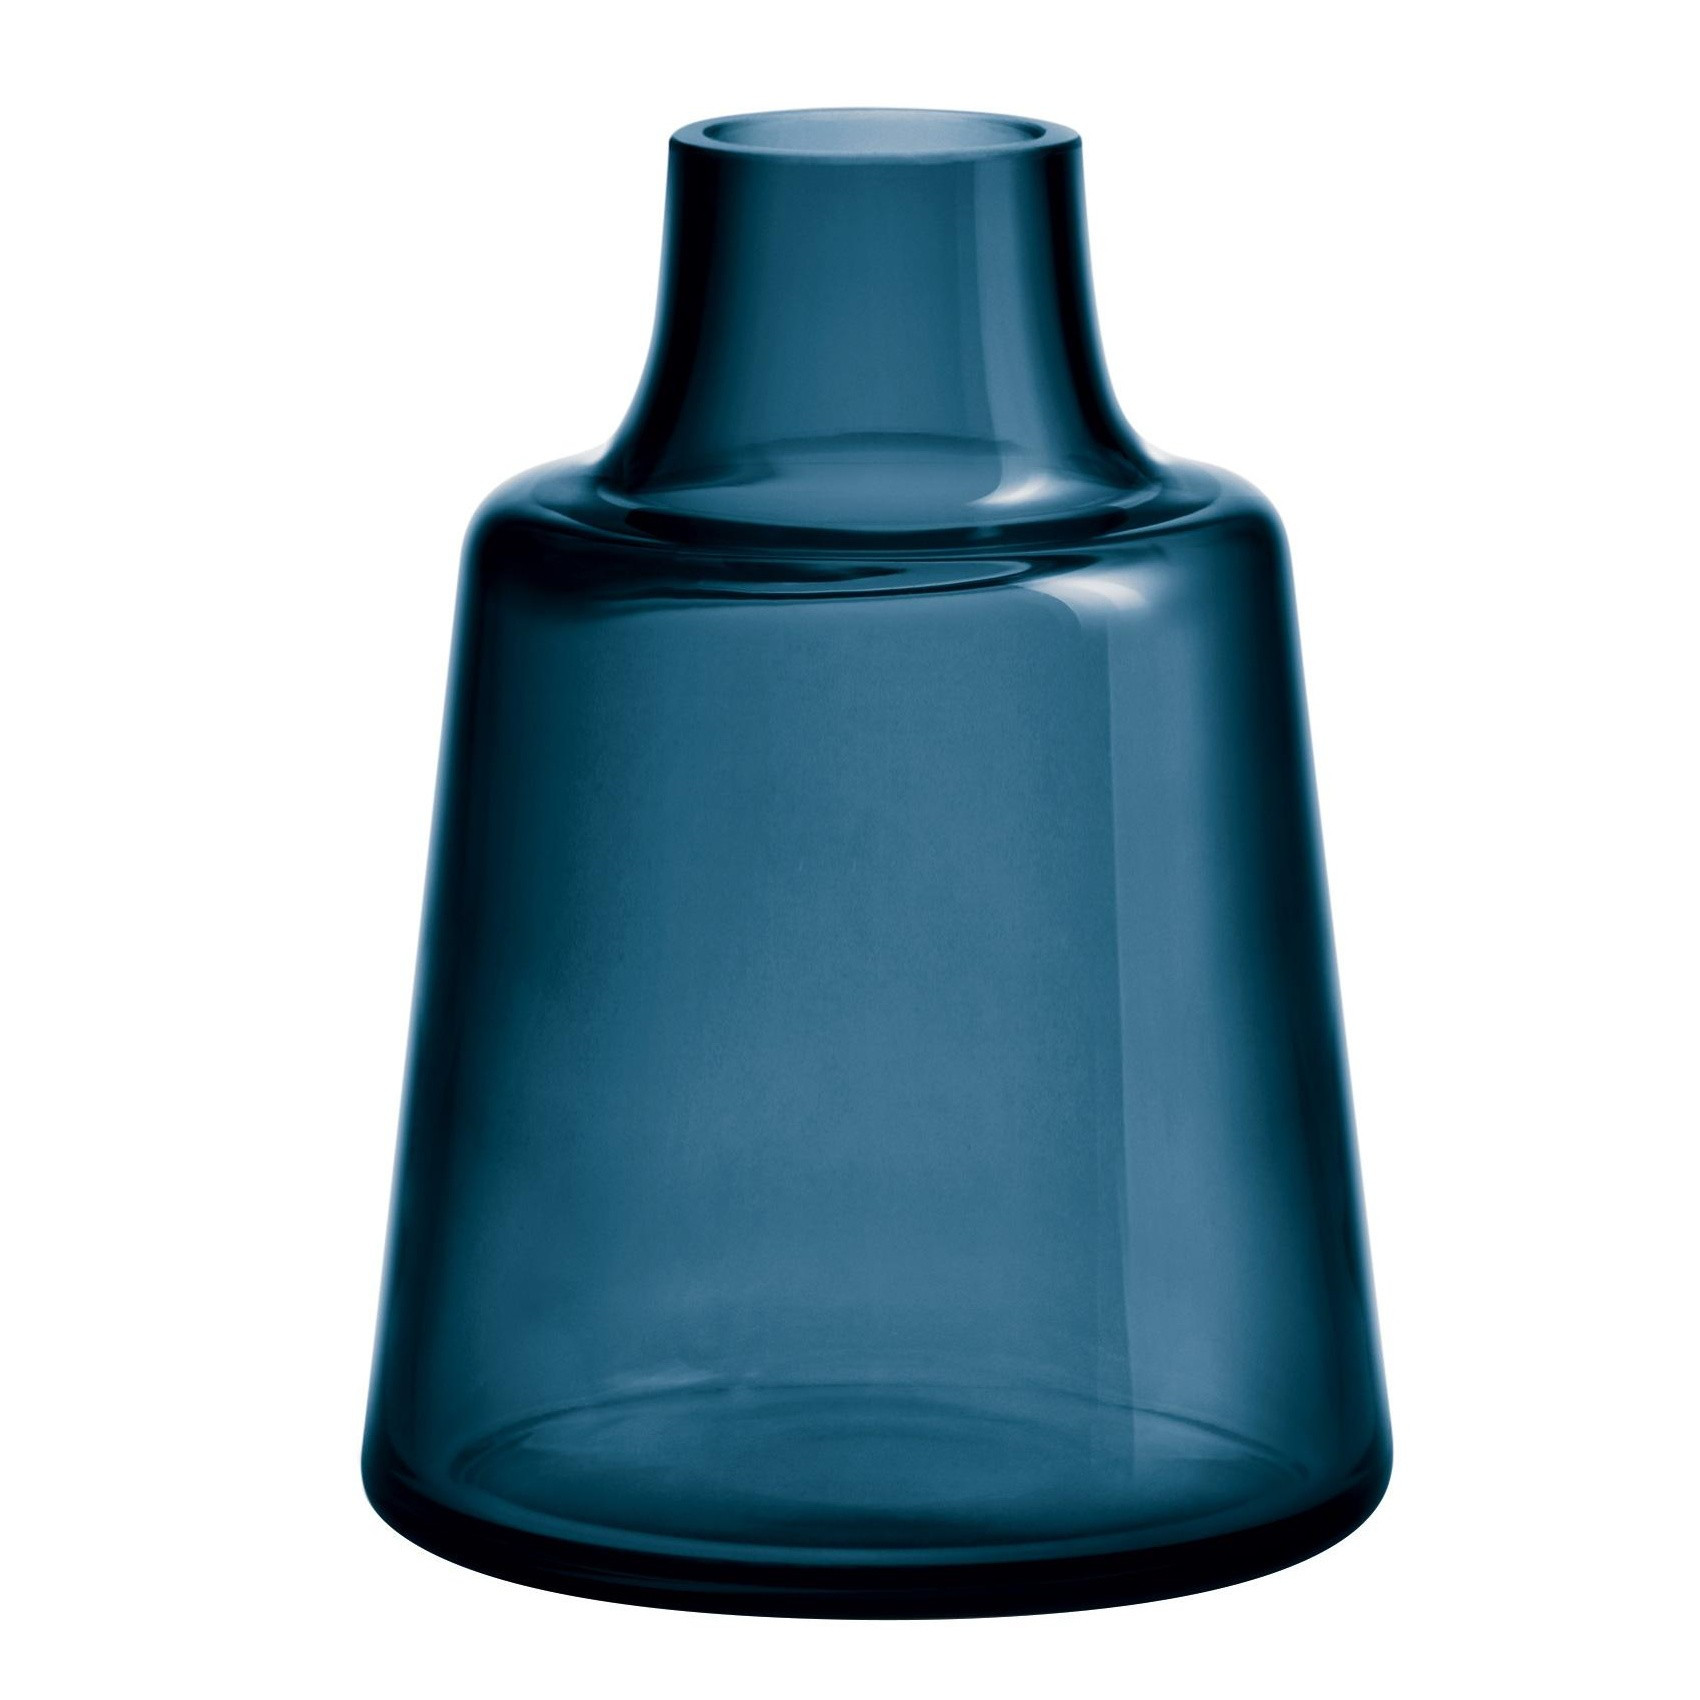 29 Wonderful Cobalt Blue Cut Glass Vase 2024 free download cobalt blue cut glass vase of holmegaard flora vase h 24cm ambientedirect within 232361 1700x1700 id1922502 c23d7e4f57bf890f68b32fb46a88790c